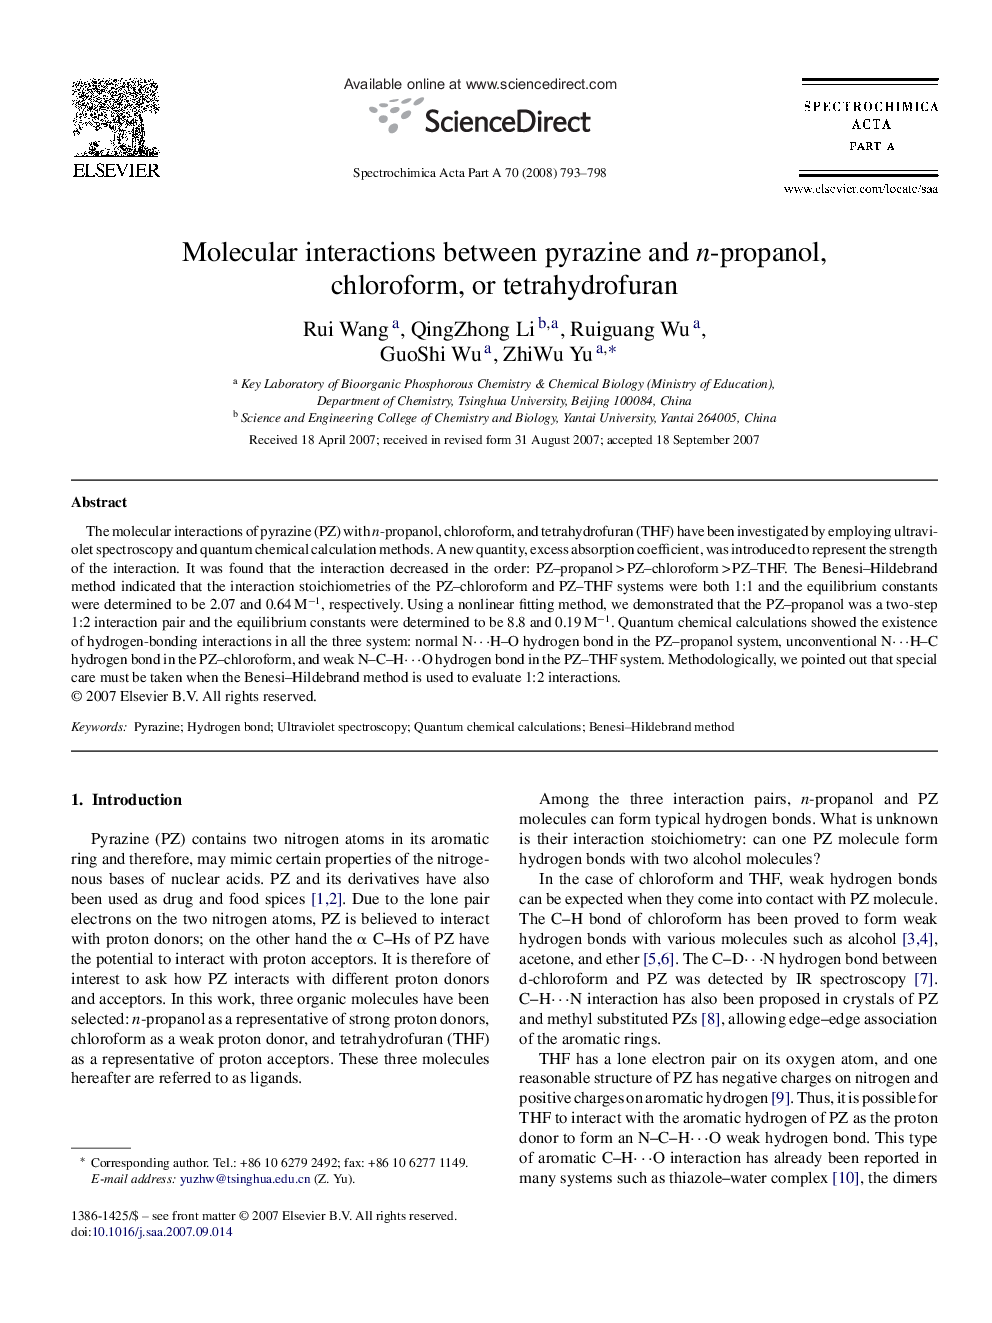 Molecular interactions between pyrazine and n-propanol, chloroform, or tetrahydrofuran